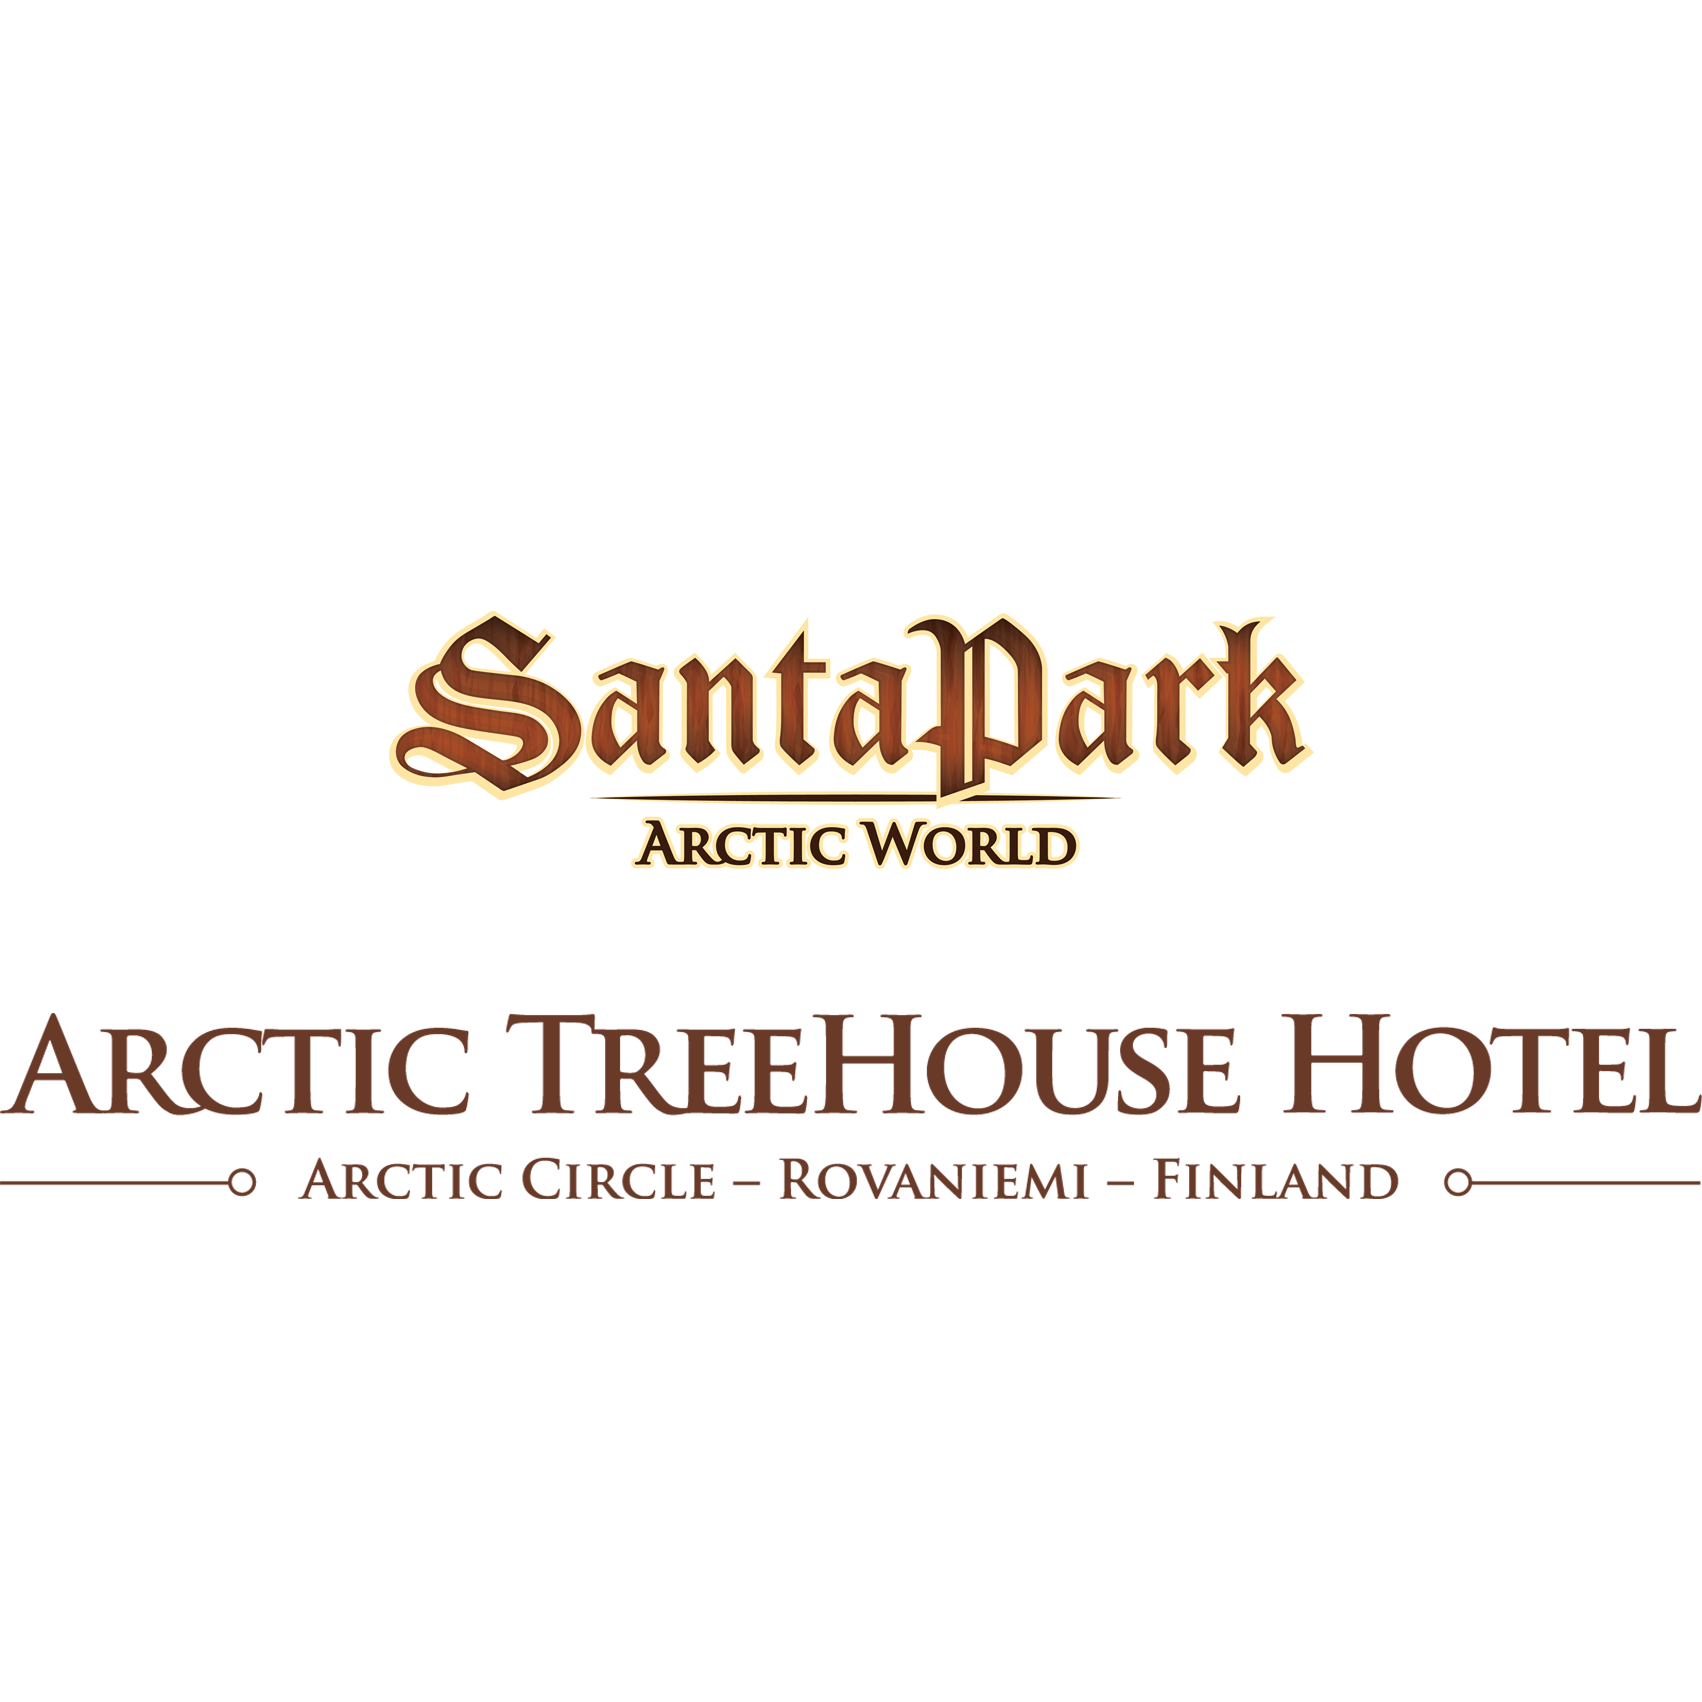 Arctic TreeHouse Hotel / SantaPark Arctic World